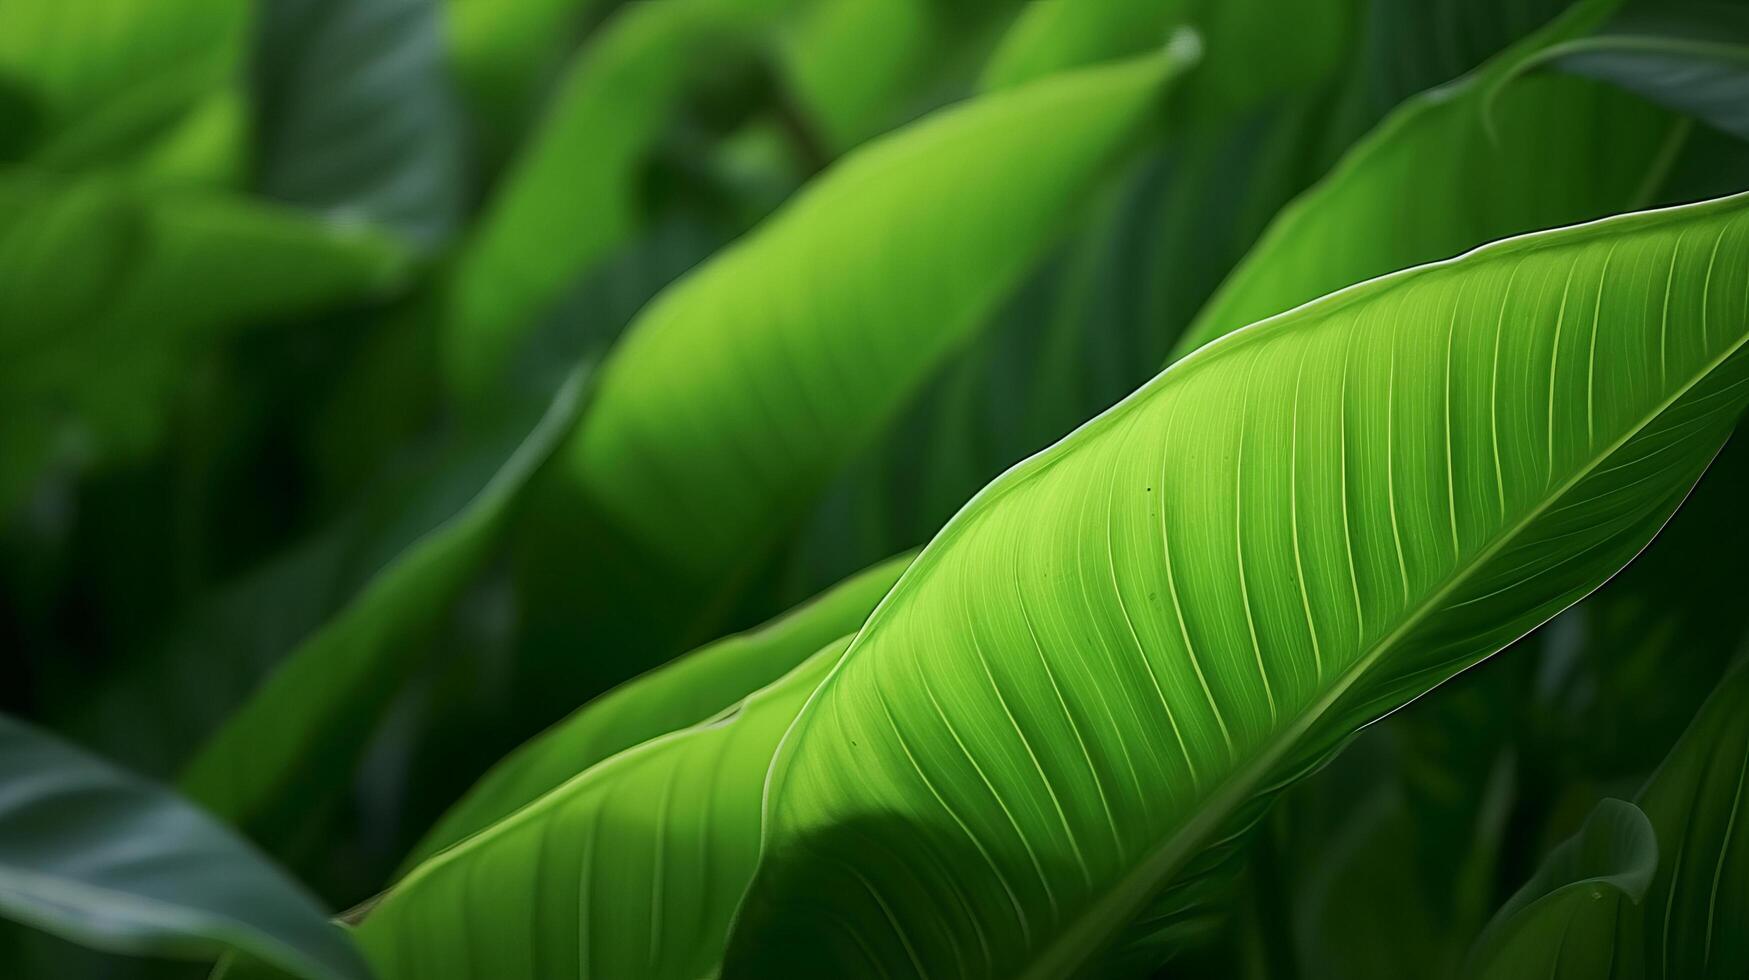 Tropical leaves background. Illustration photo